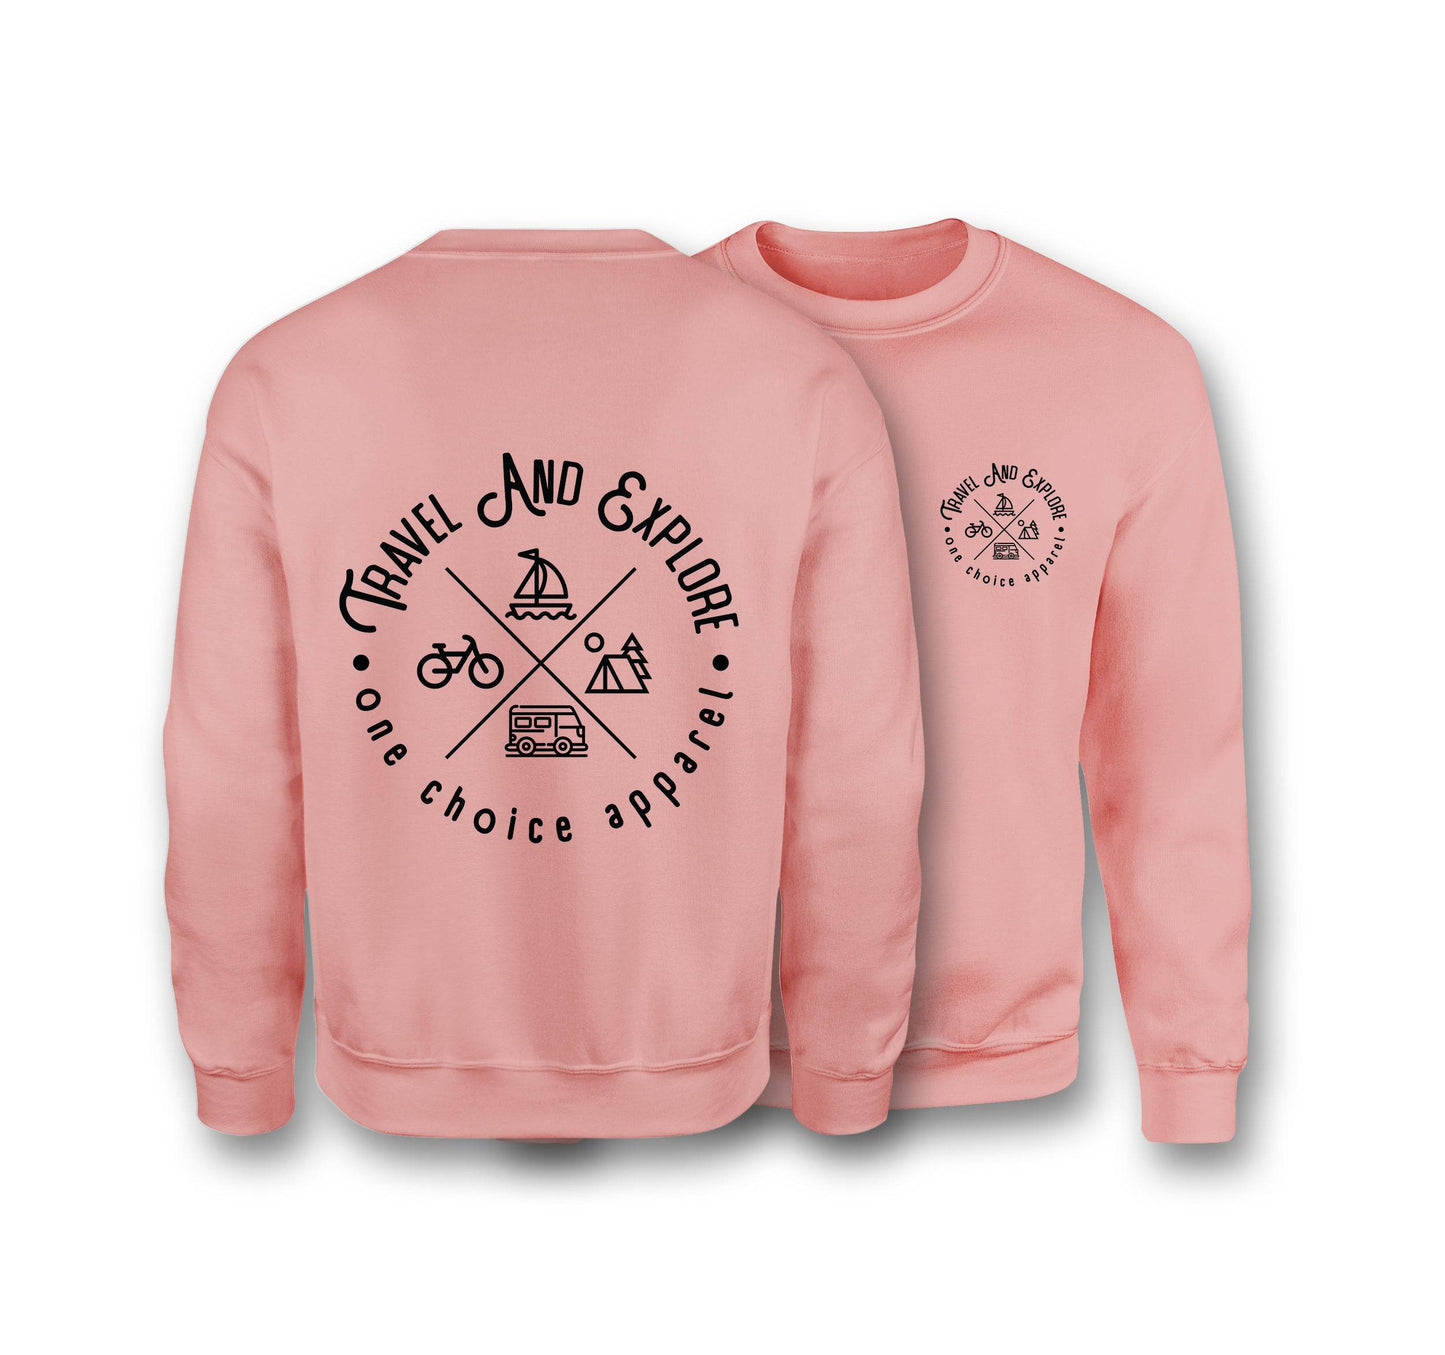 Travel & Explore Sweatshirt - Organic Cotton Sweatshirt - One Choice Apparel